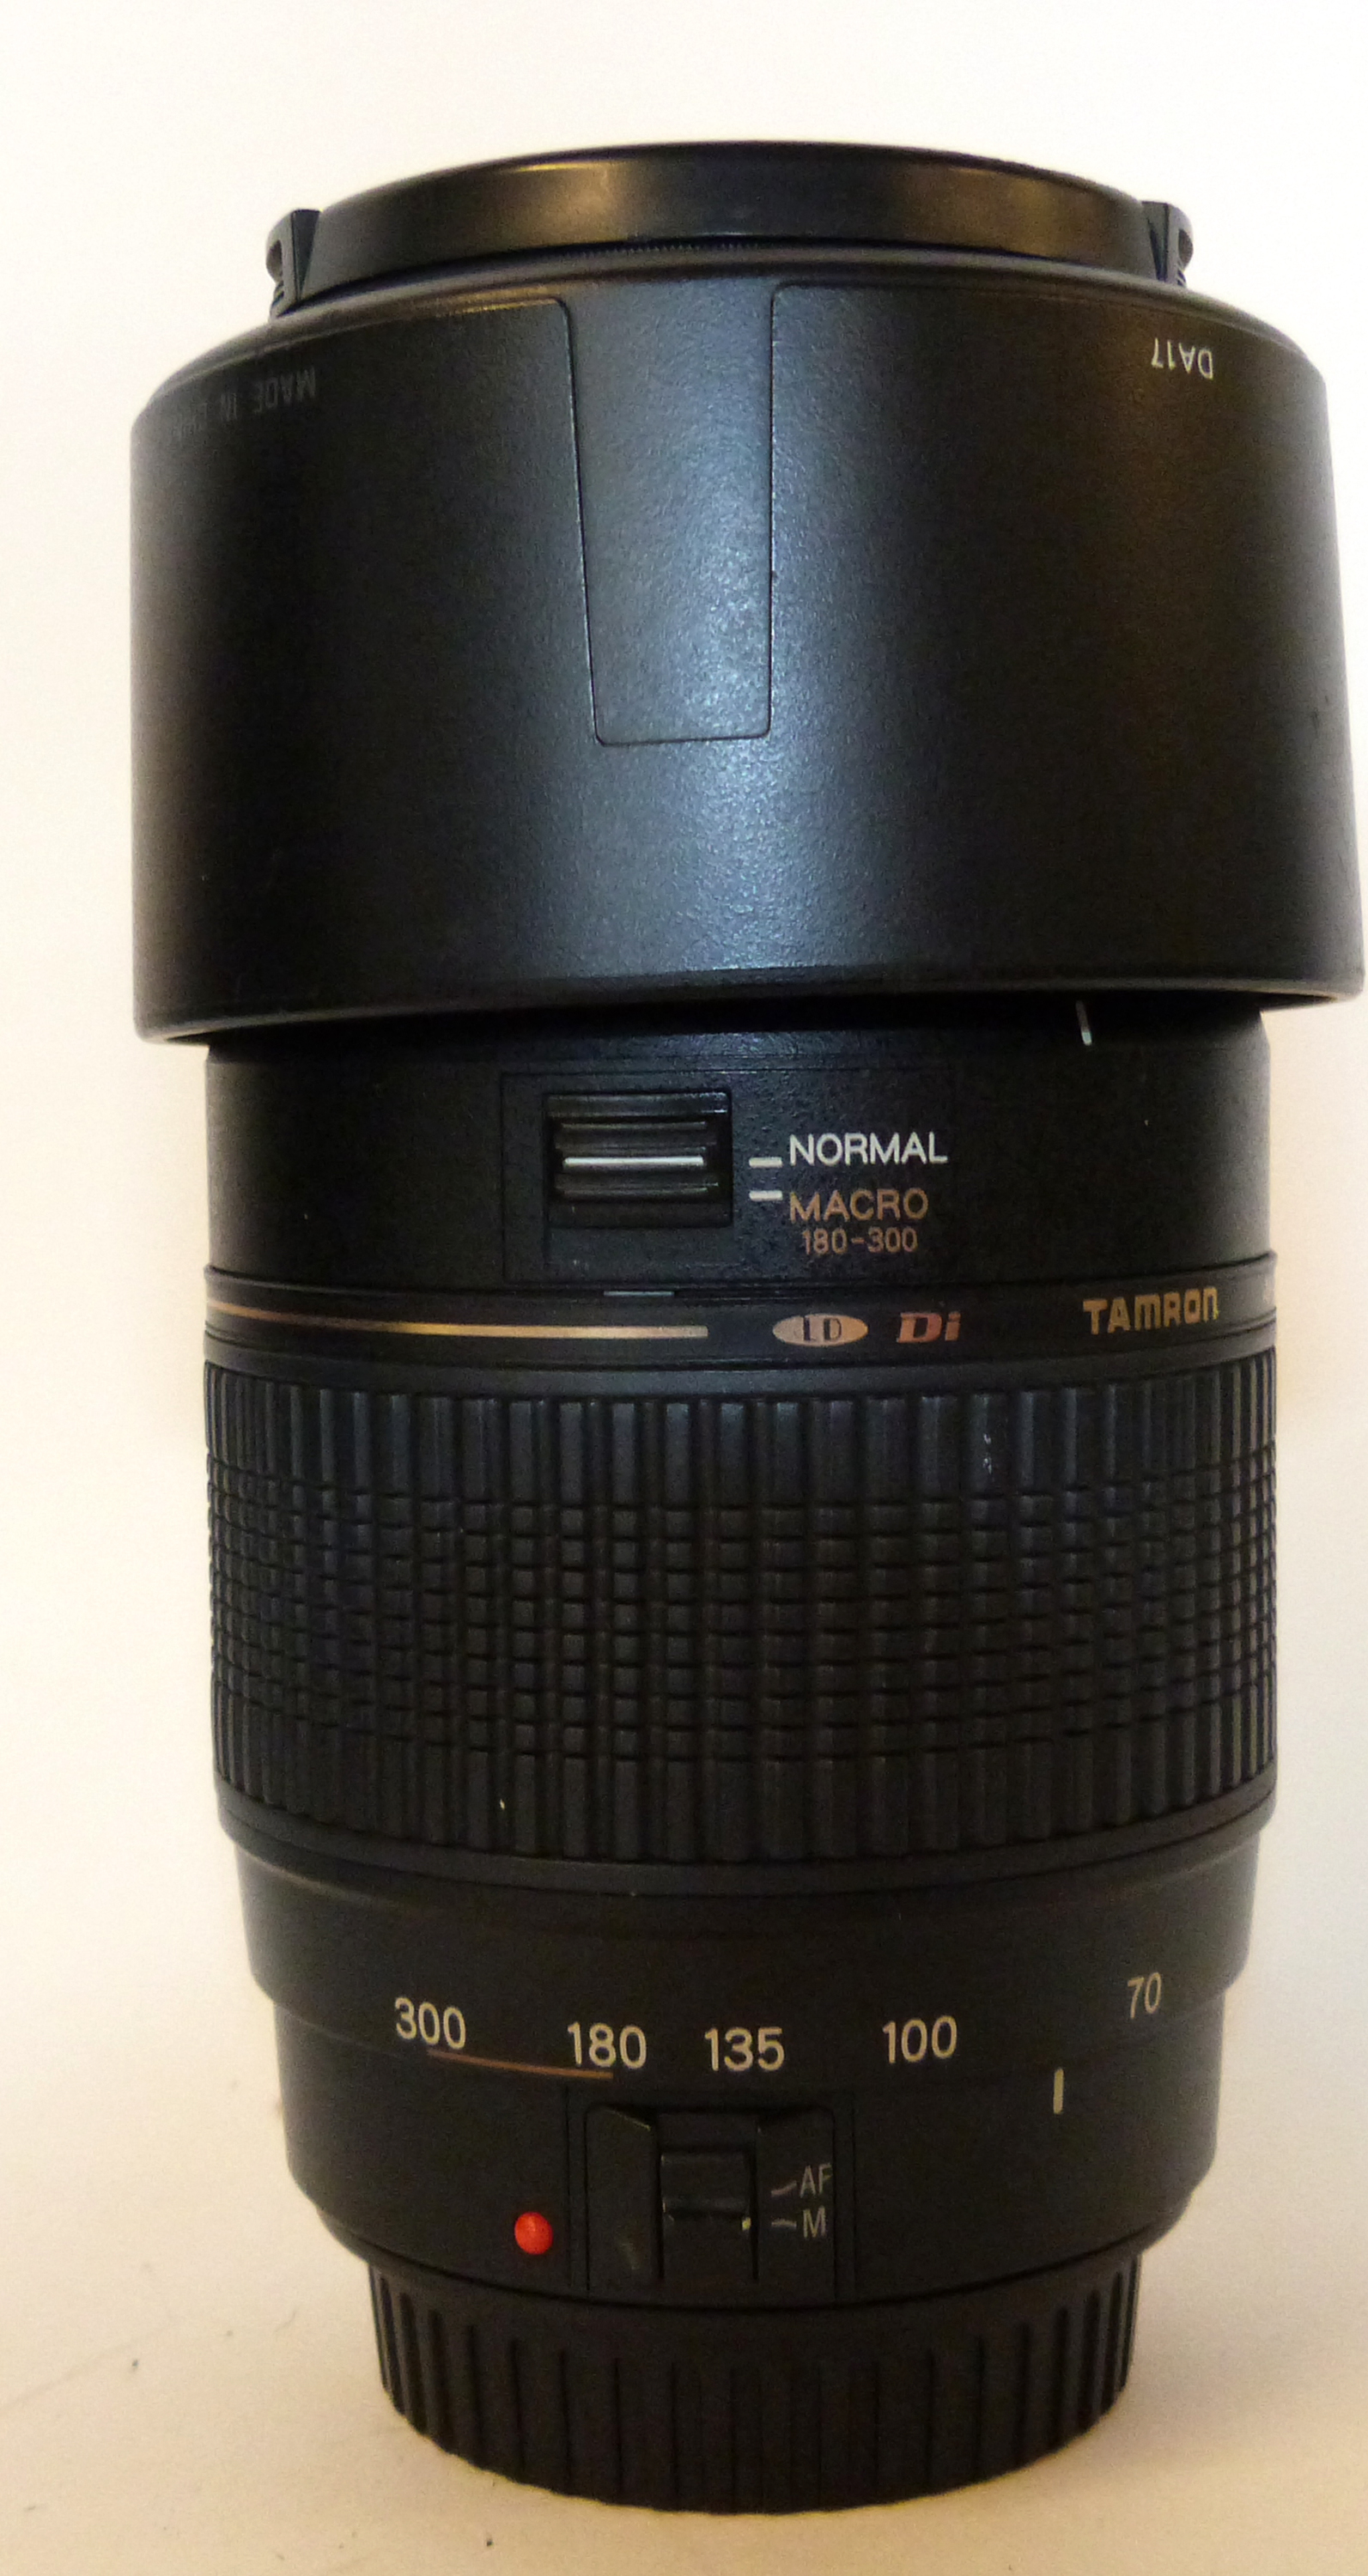 Canon EOS 1100 D digital camera together with Canon zoom lens EF-S 18-55mm, Tamron AF 70-300mm lens, - Image 6 of 6